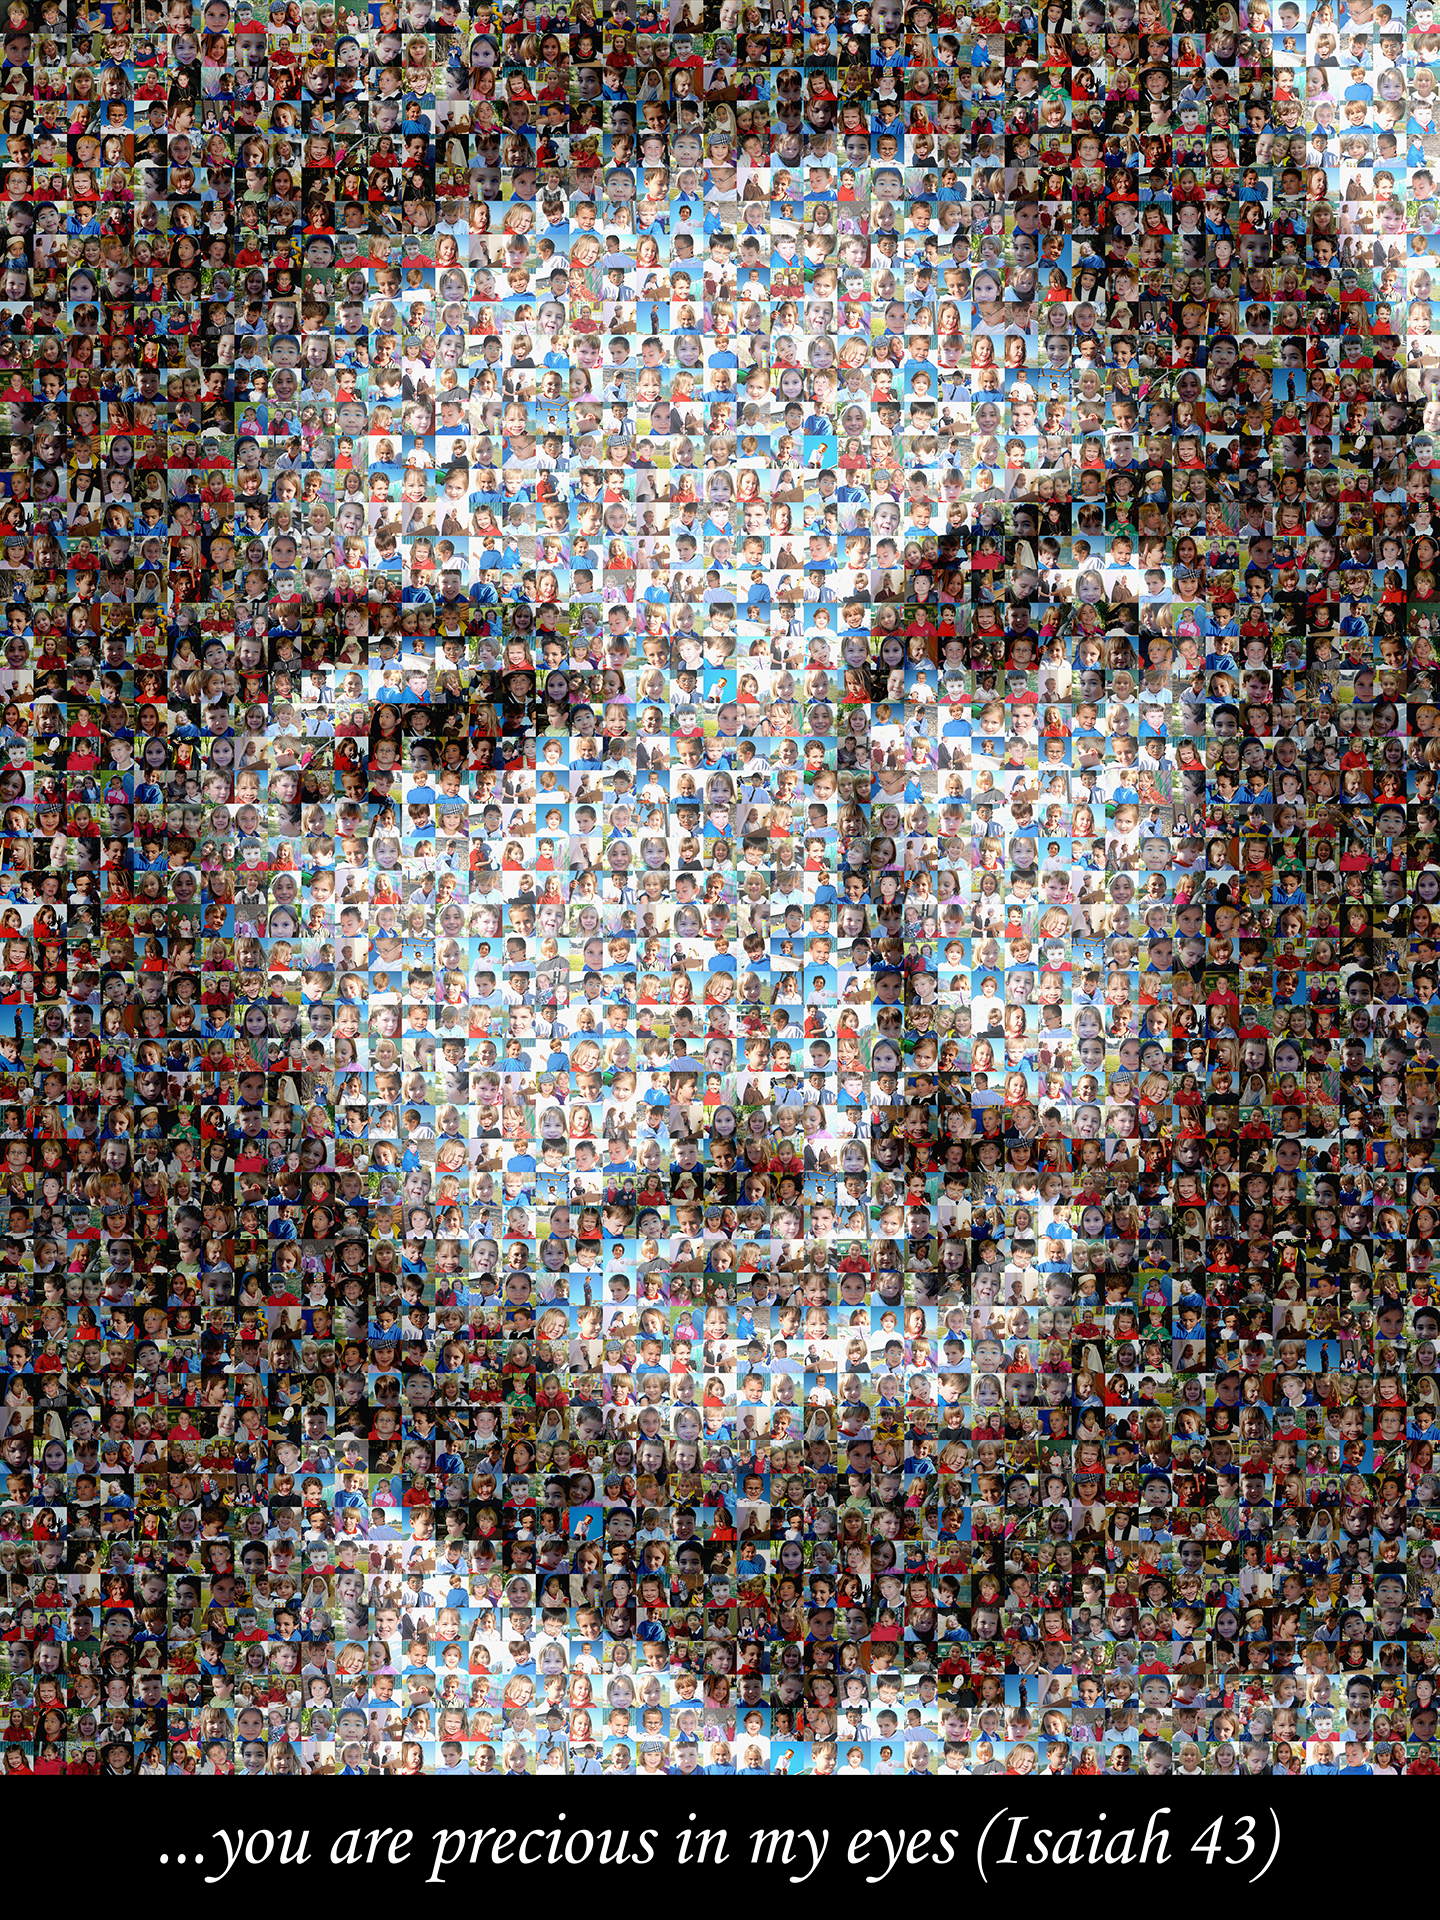 photo mosaic created using 365 photos of children